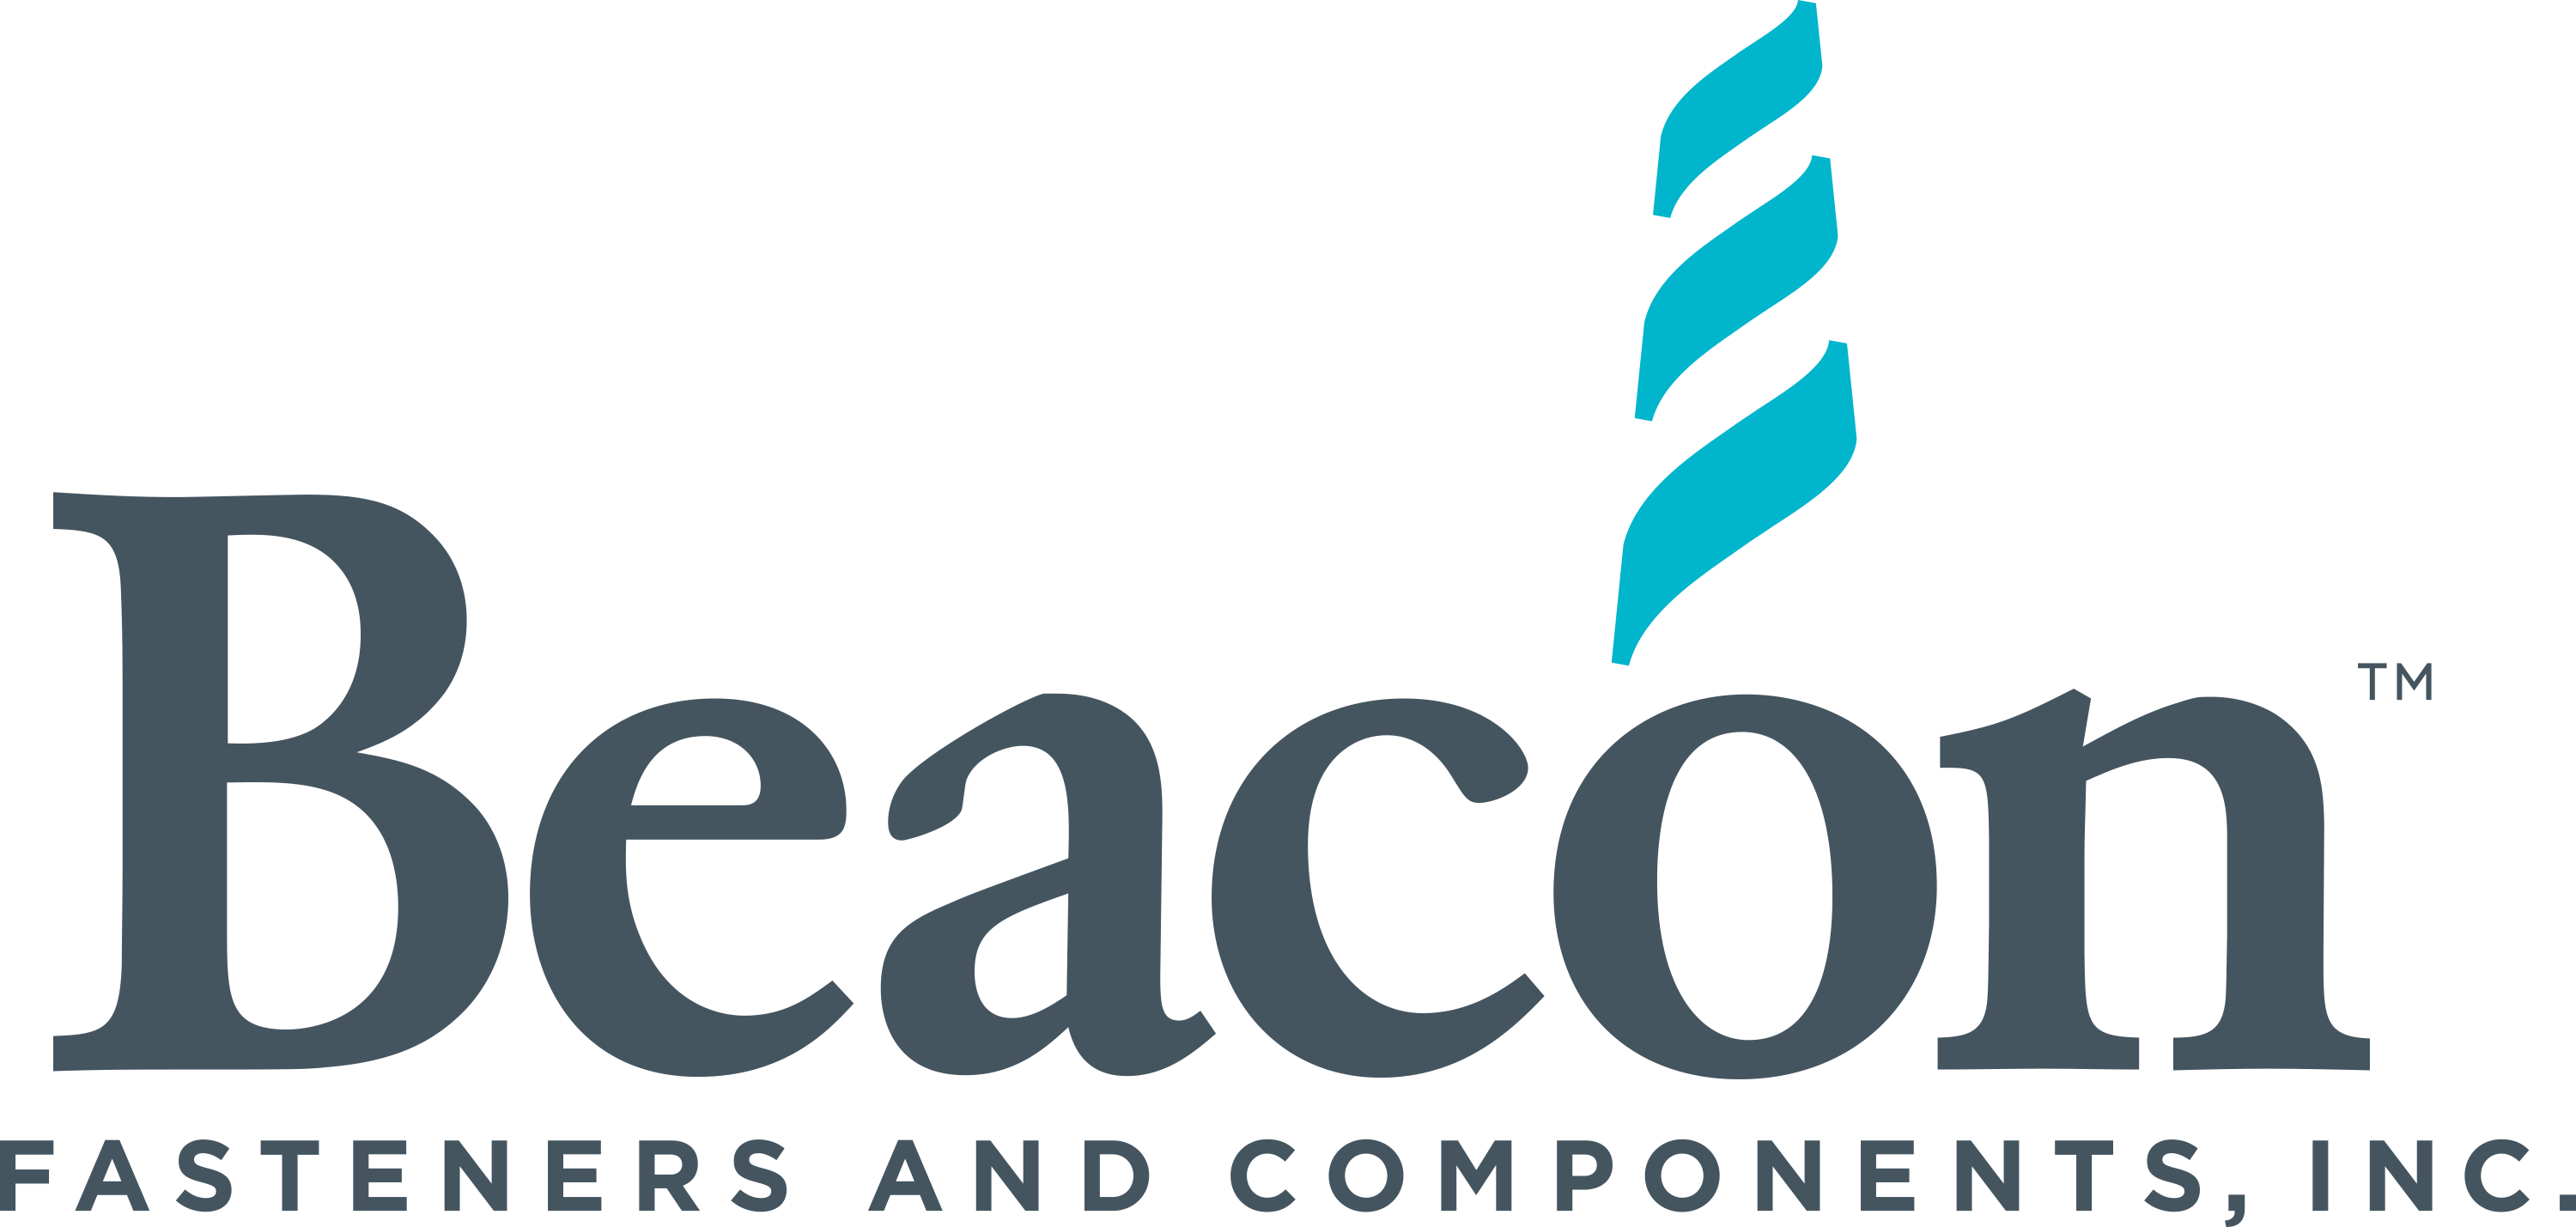 Beacon Fasteners Logo